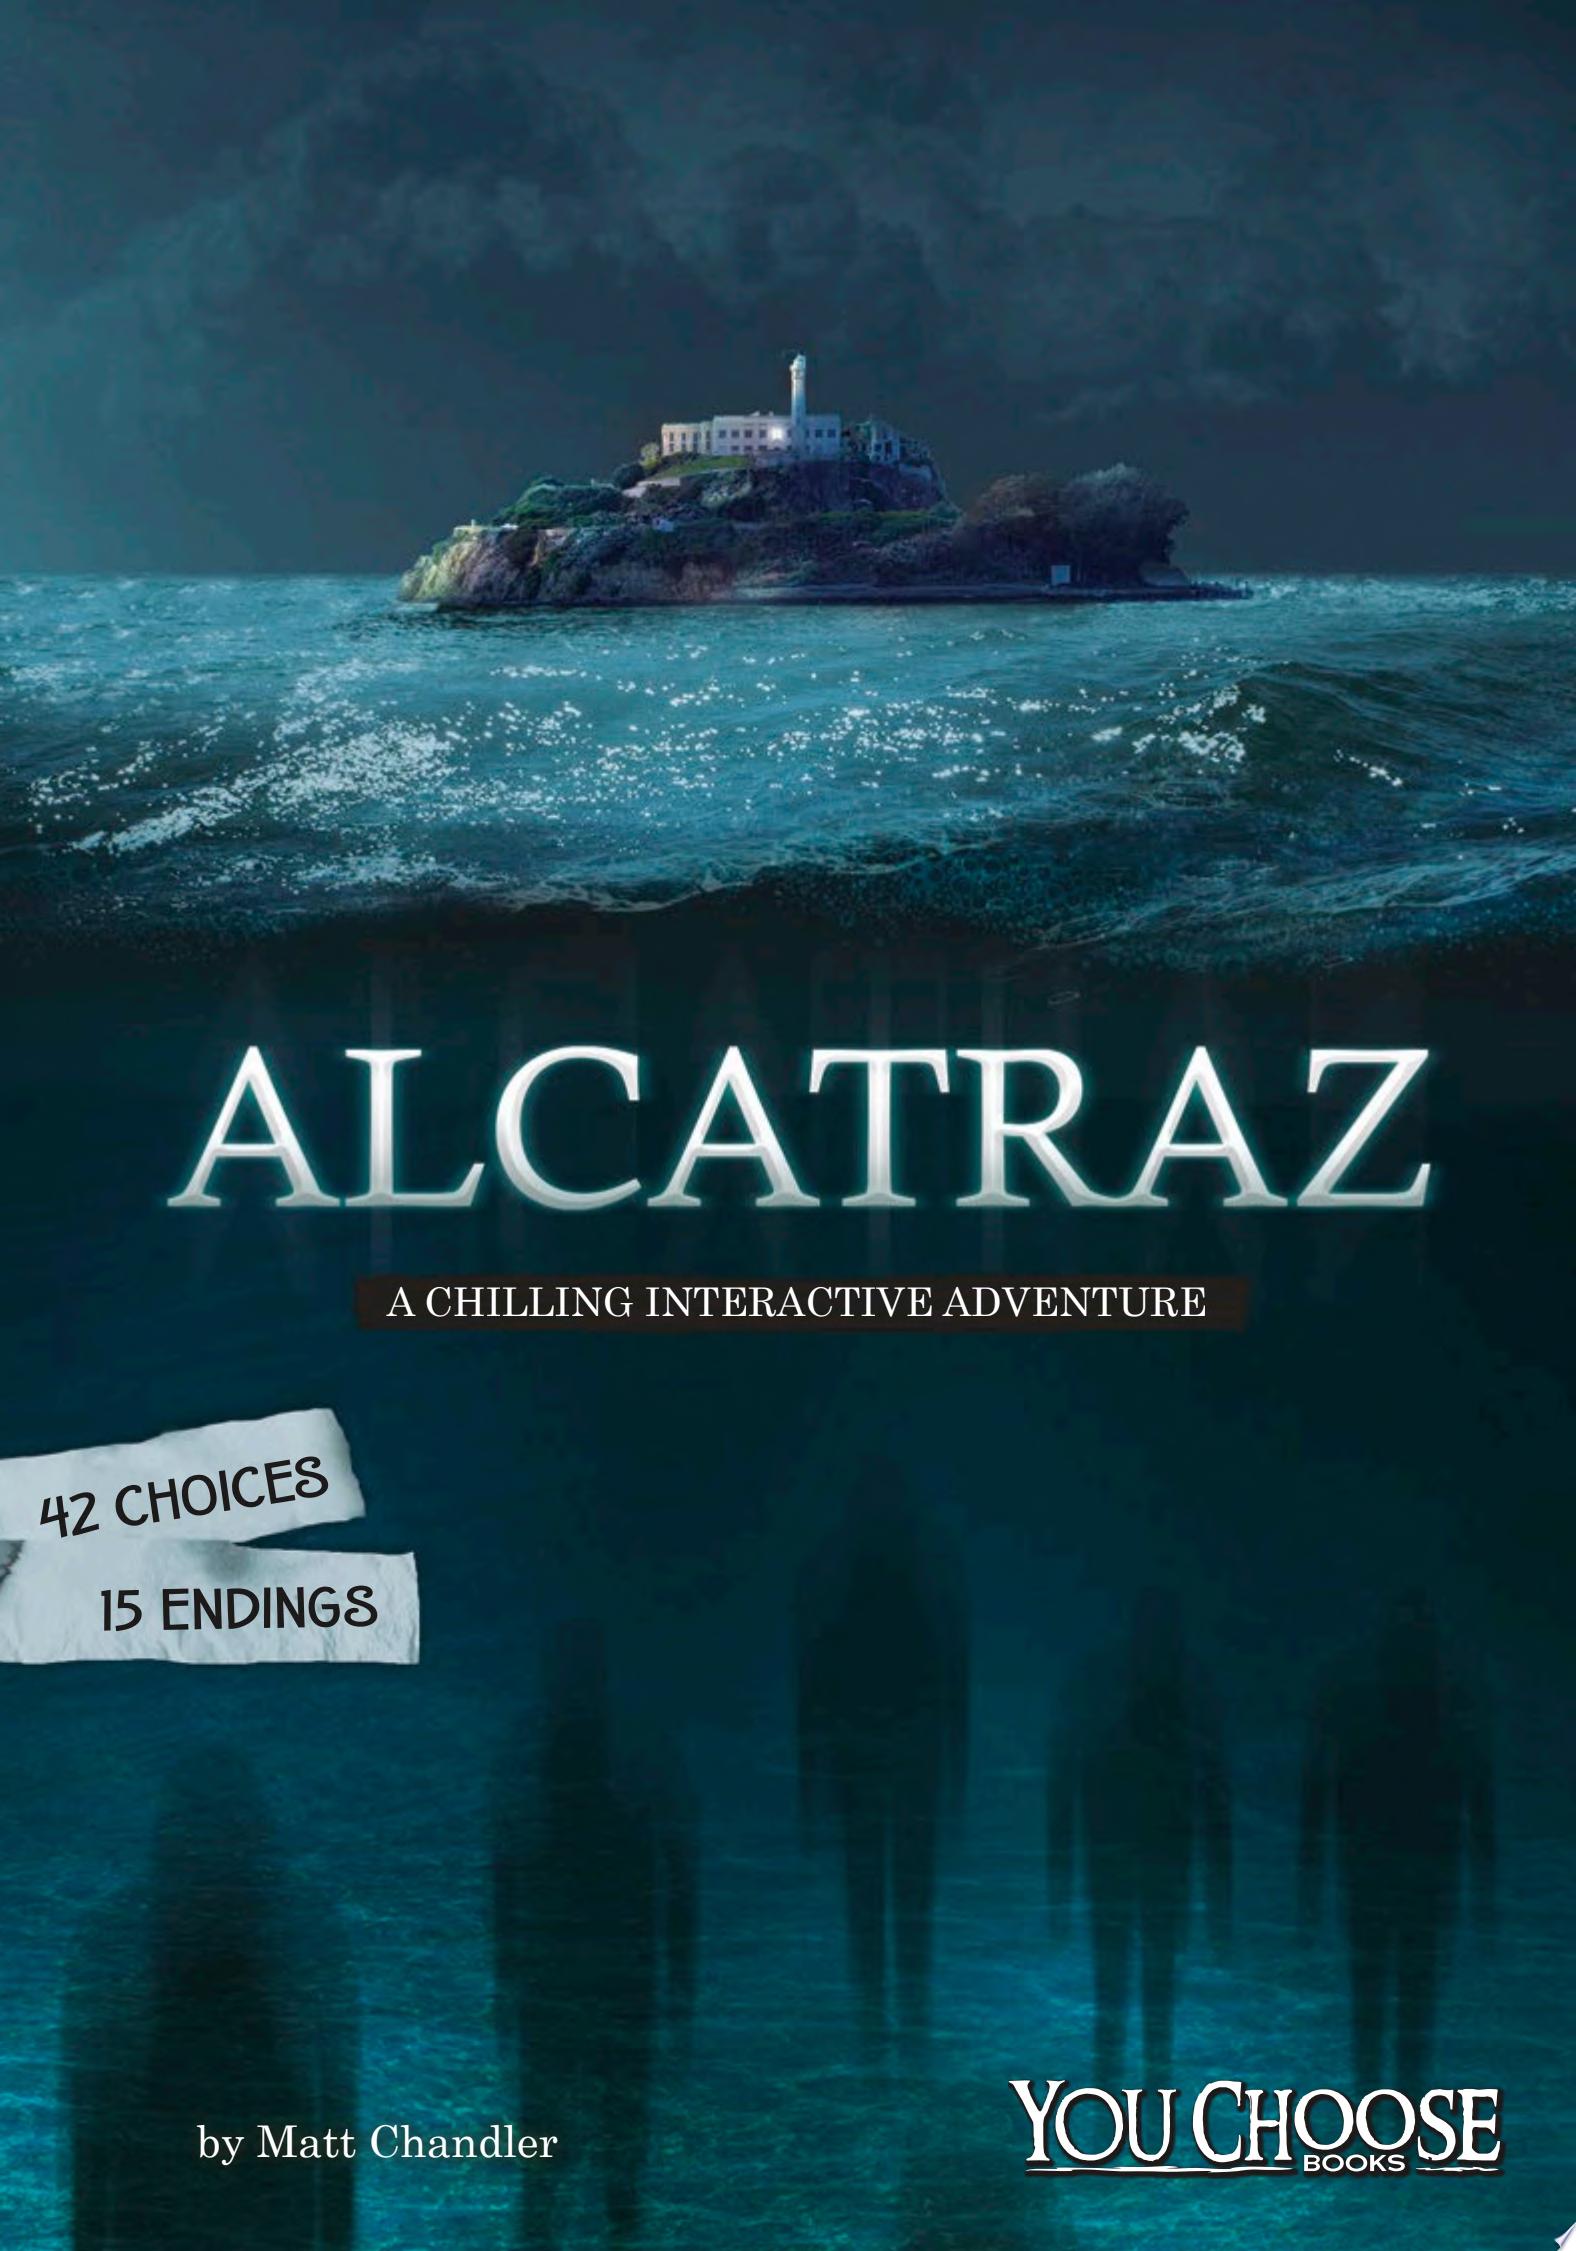 Image for "Alcatraz"